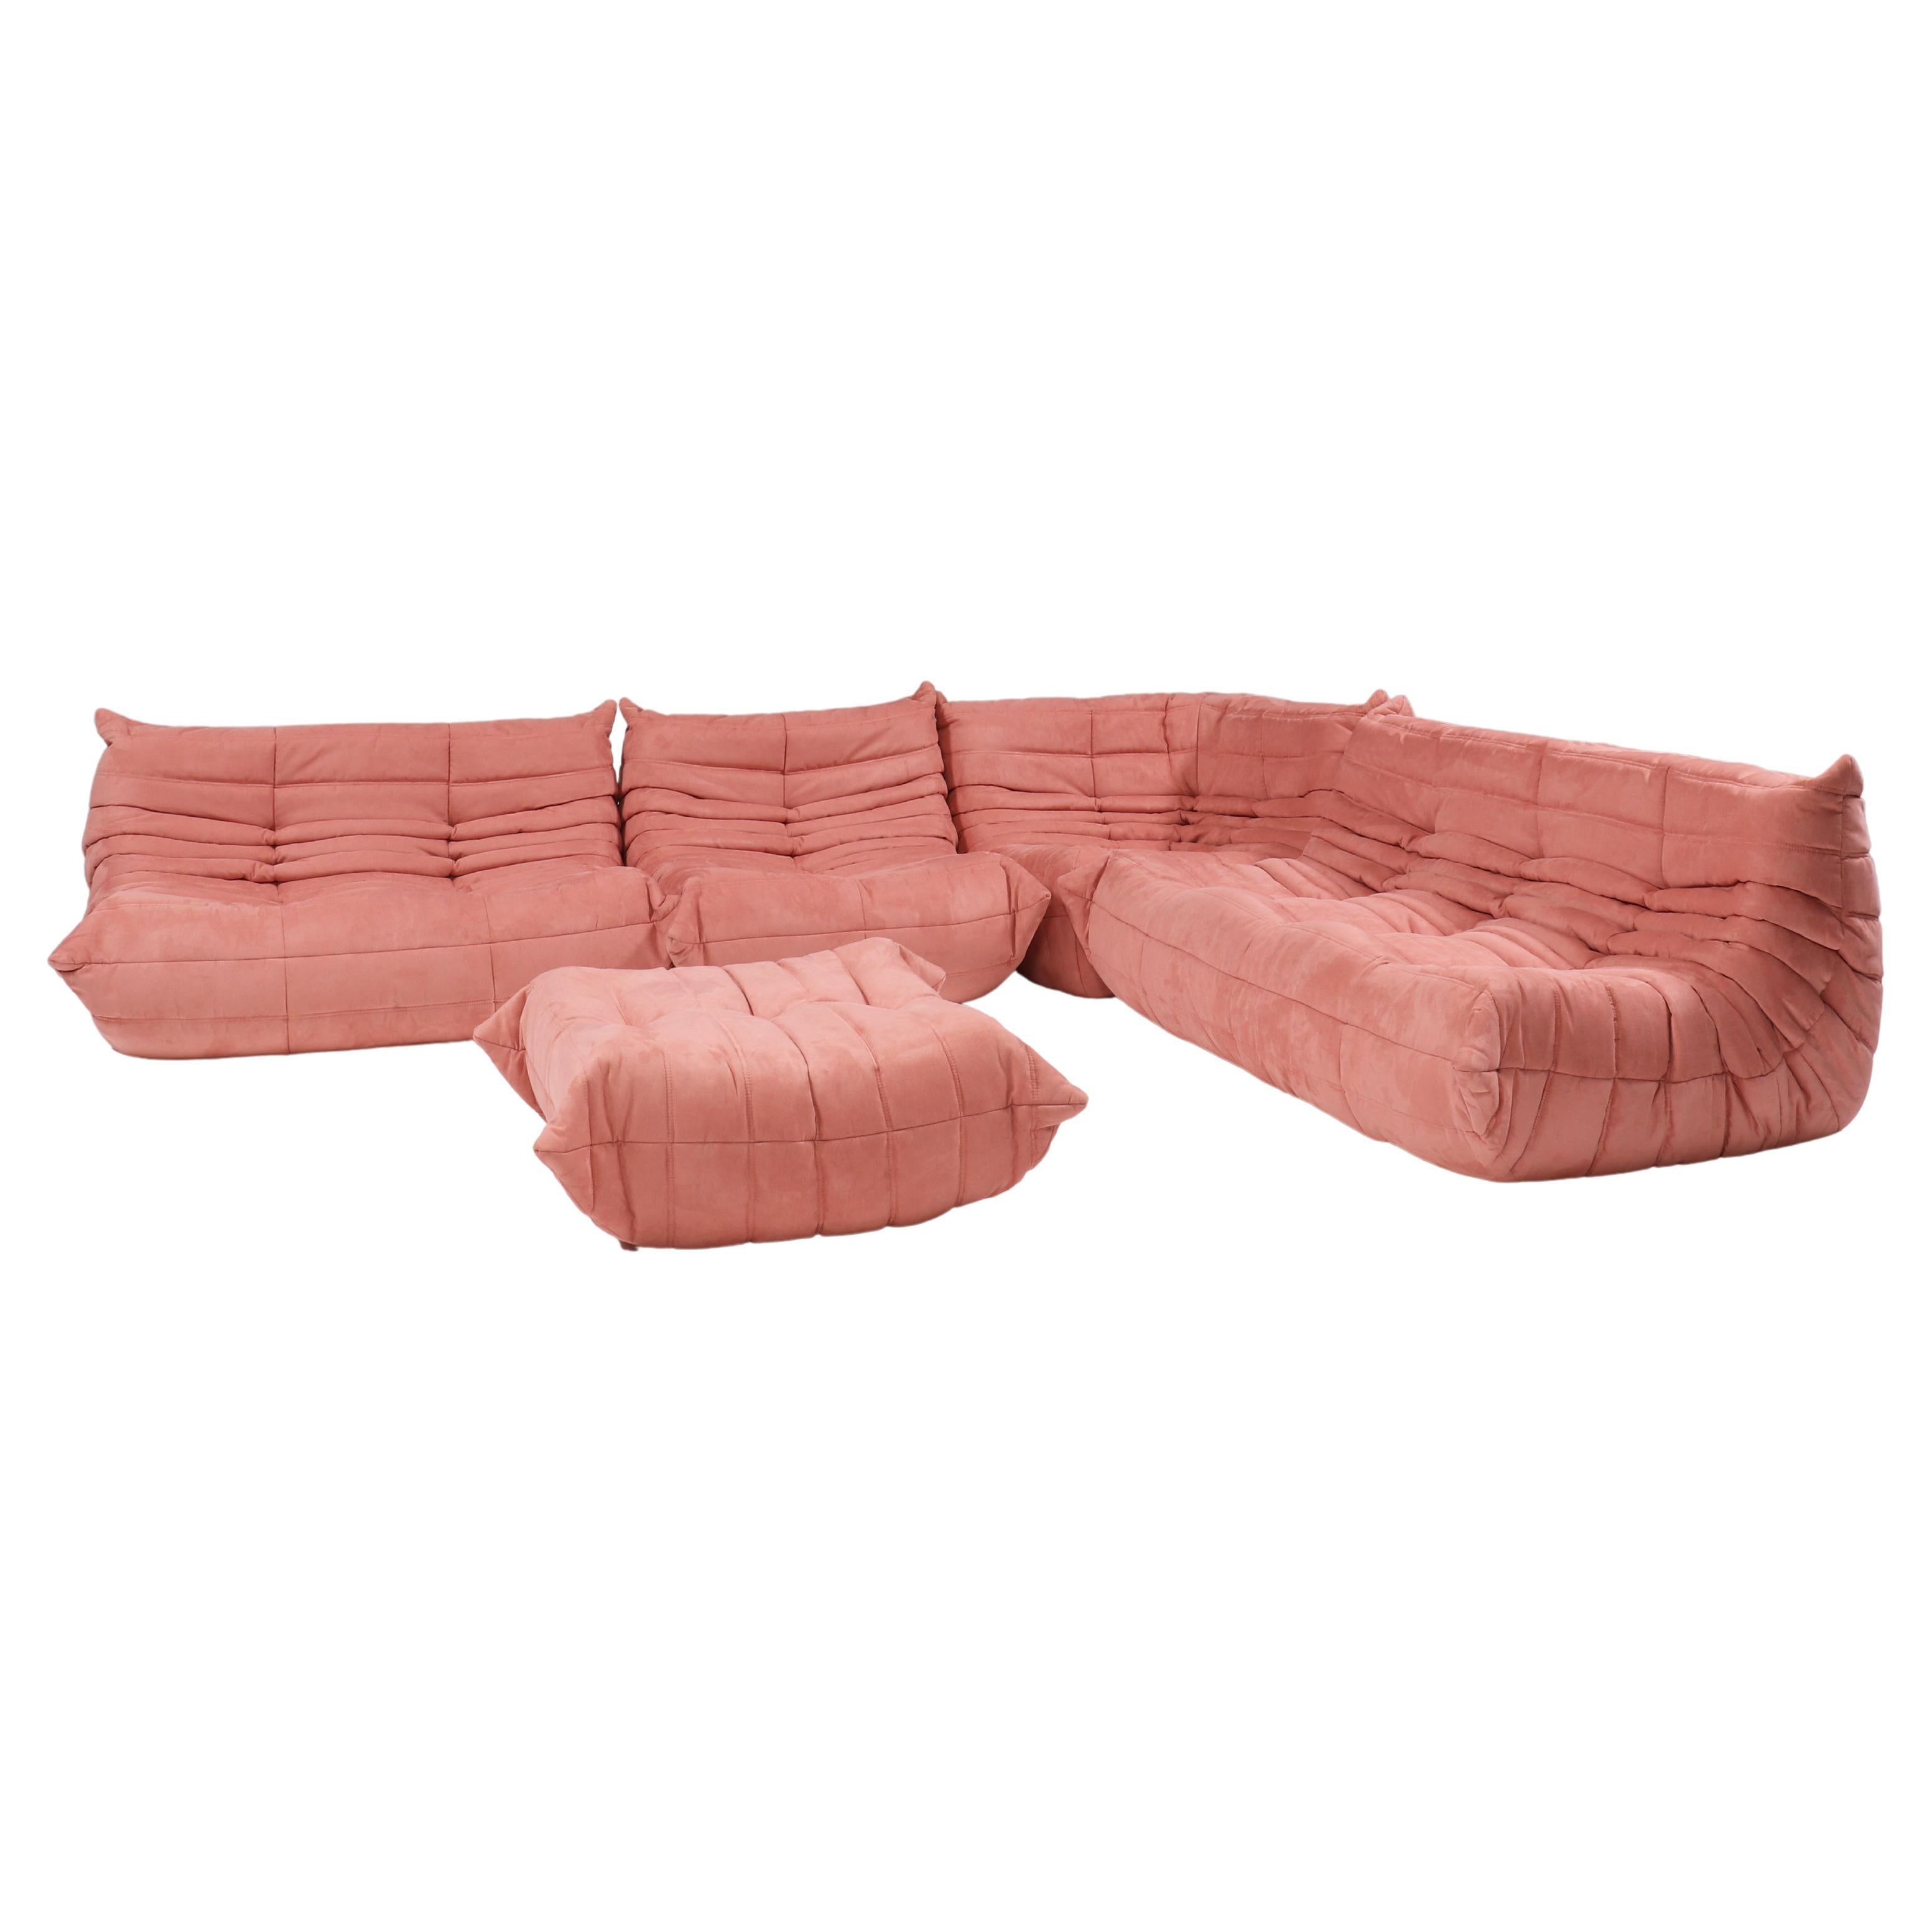 Ligne Roset by Michel Ducaroy Togo Pink Modular Sofa and Footstool, Set of 5